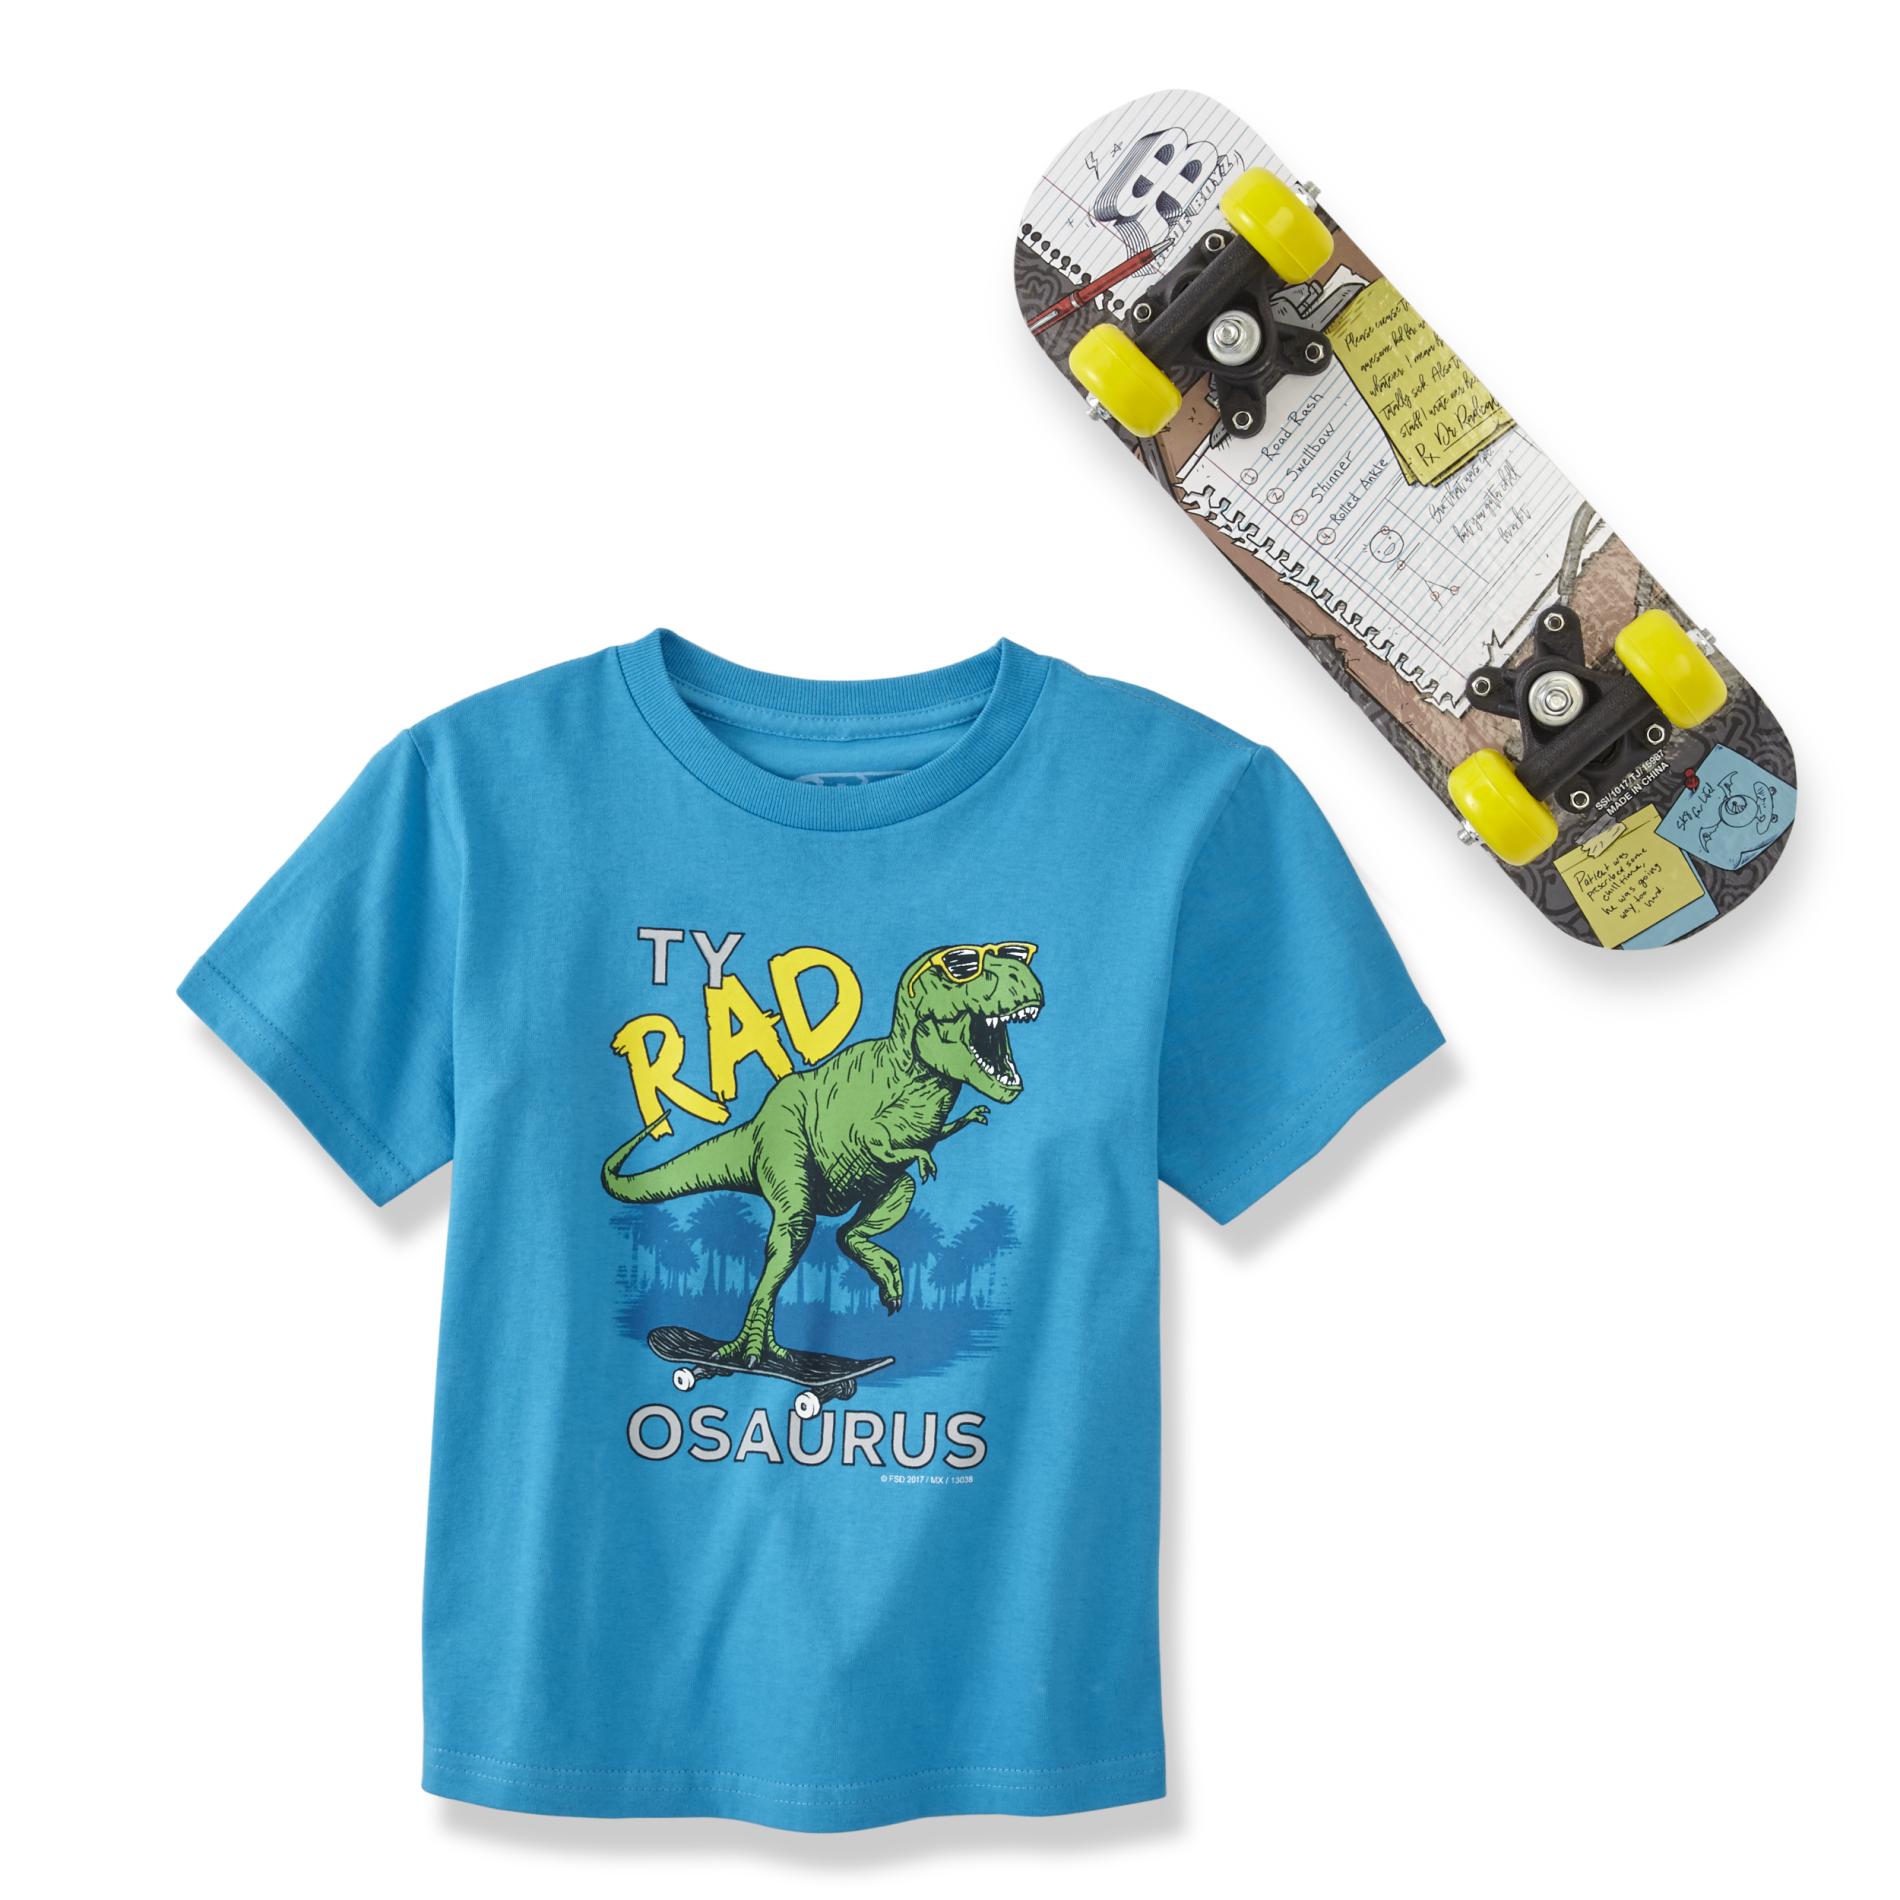 Rudeboyz Boys' Graphic T-Shirt & Skateboard - Ty Rad Osaurus